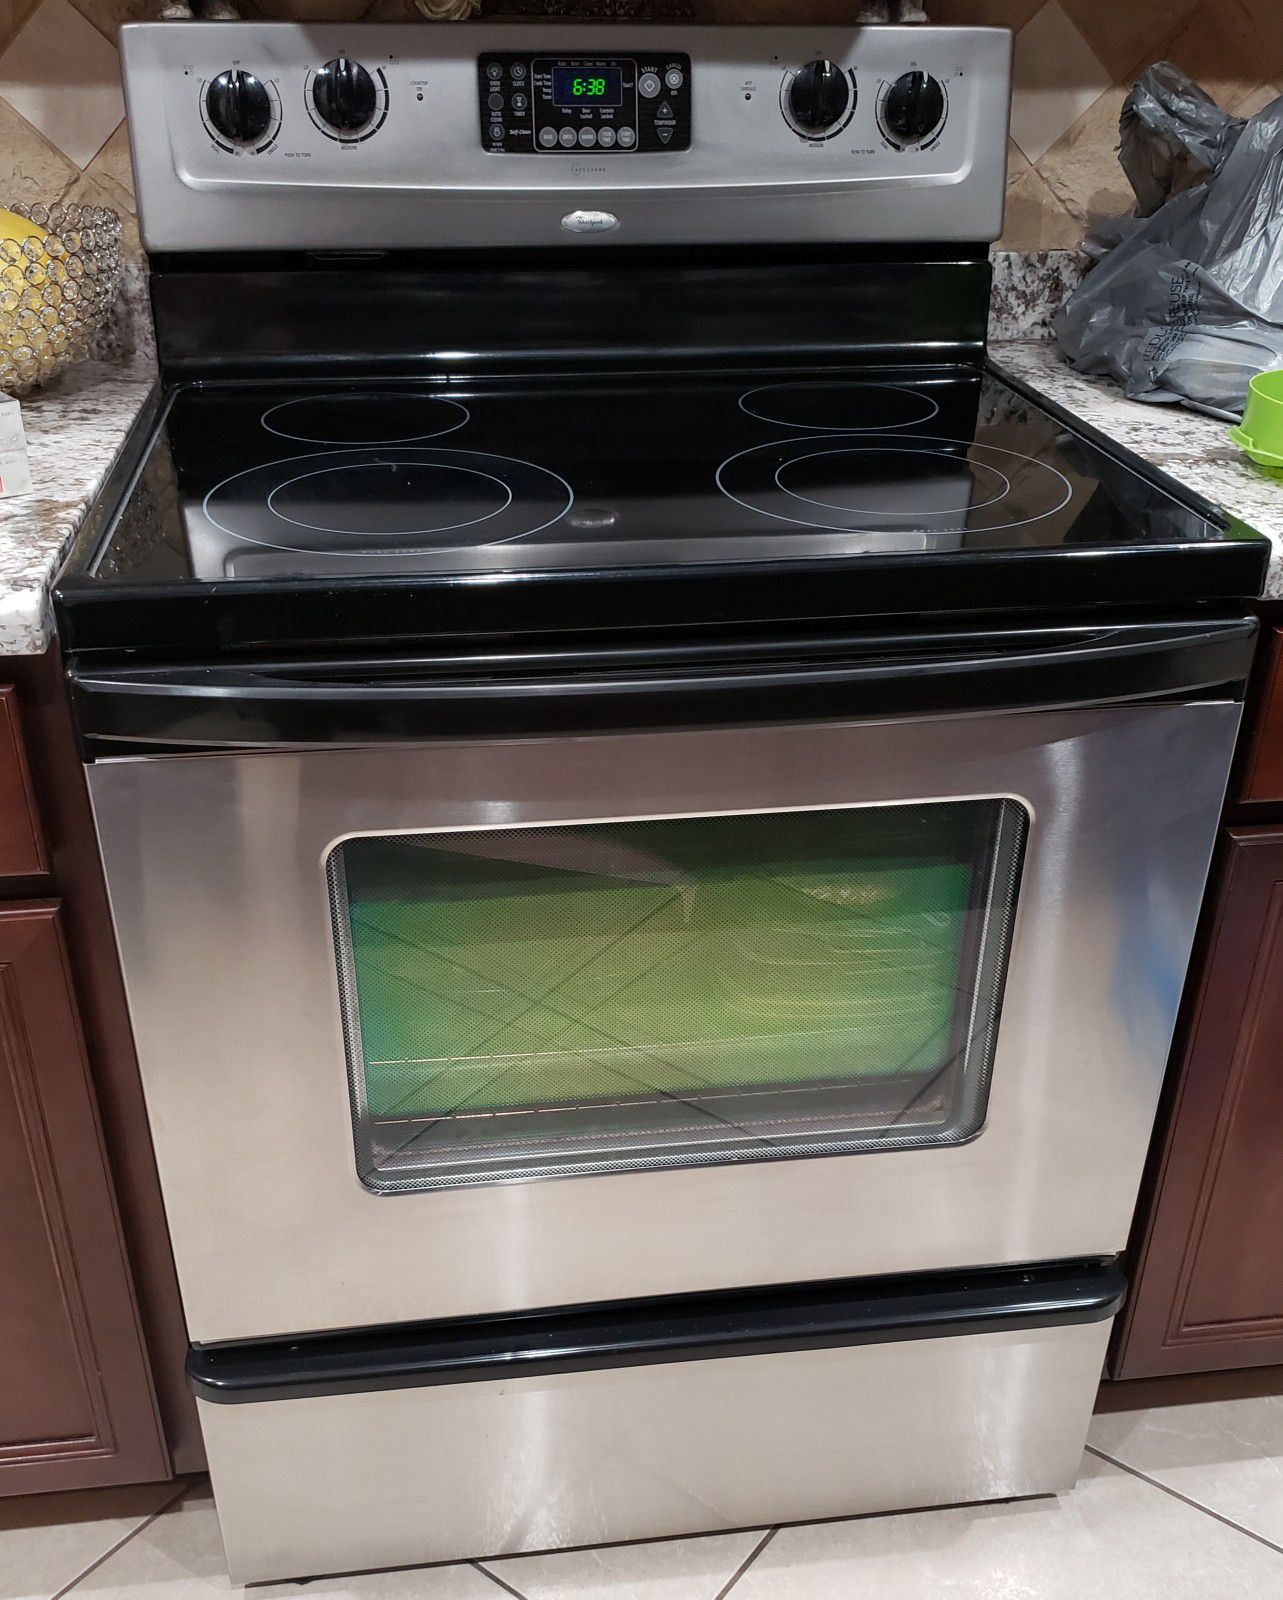 Electric stove, Dishwasher, Microwave Whirlpool brand